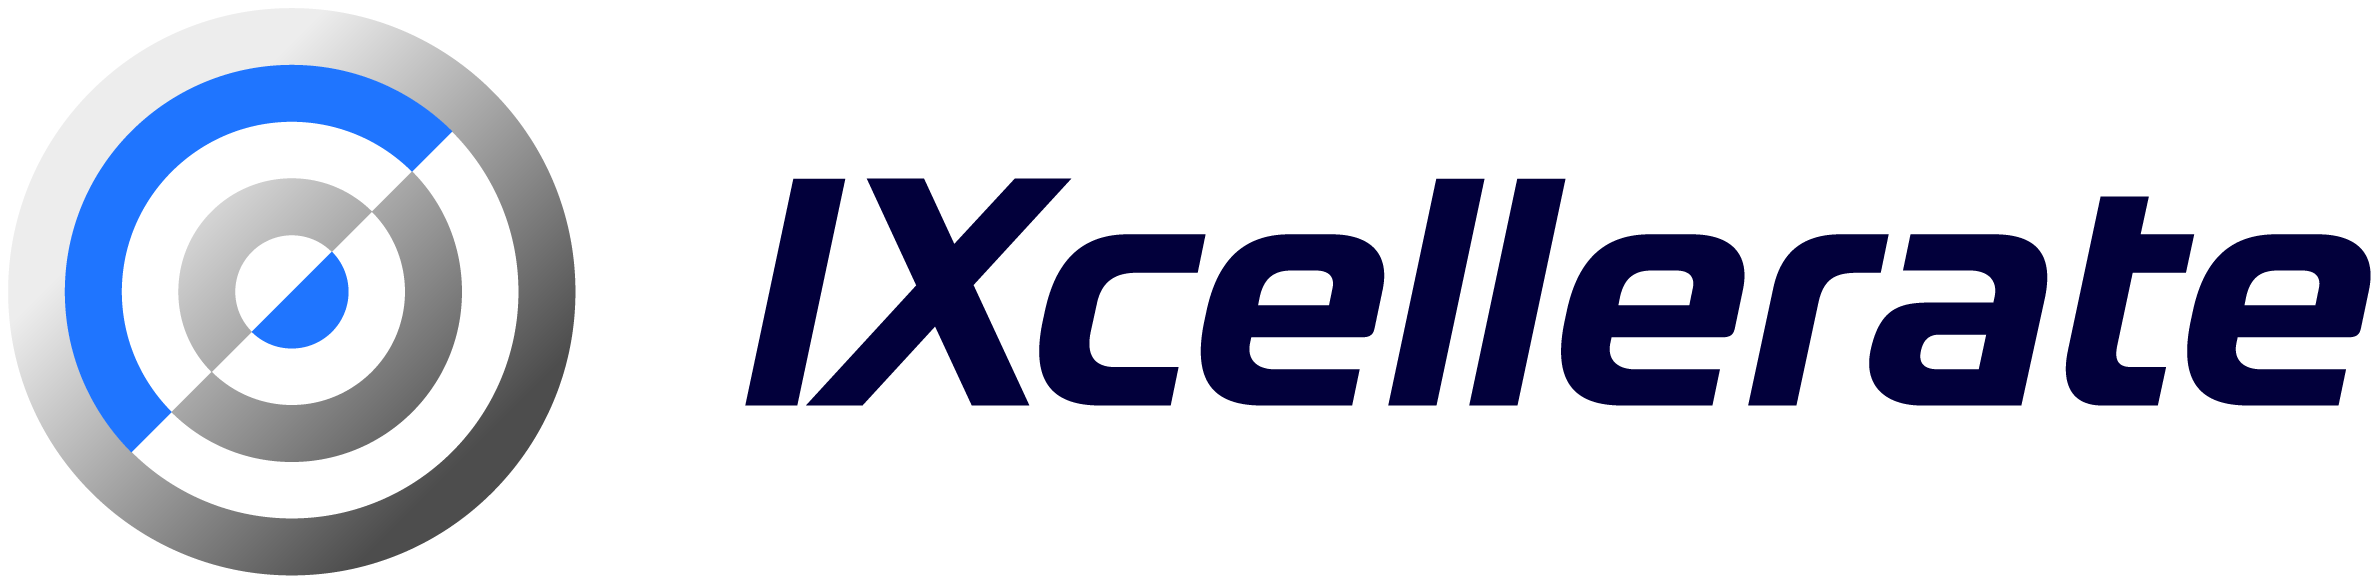 IXcellerate - Икселерейт